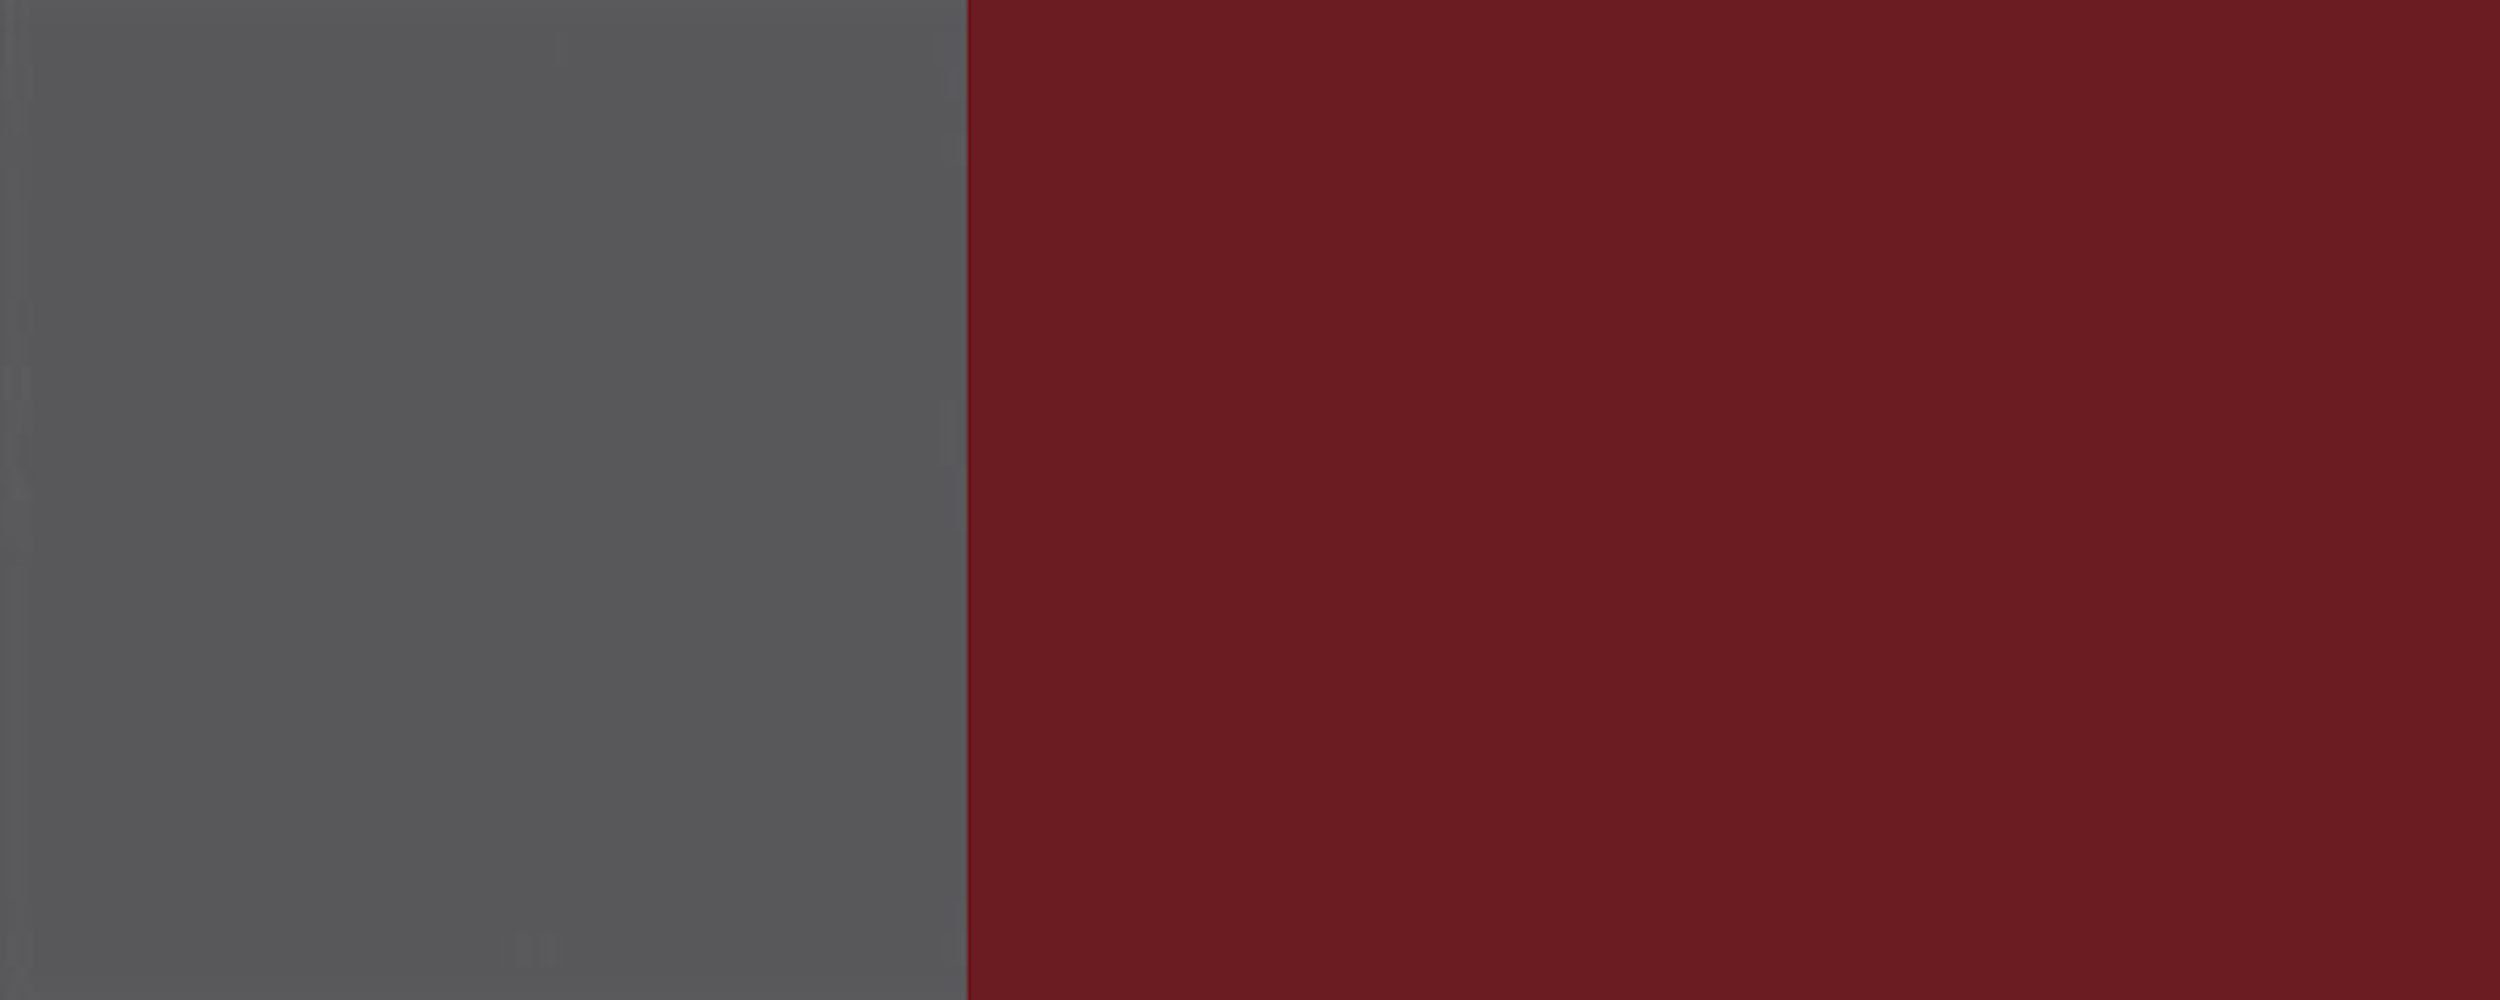 Front- Rimini und Schubladen Korpusfarbe Feldmann-Wohnen matt 2 80cm purpurrot (Teilauszug) 3004 Unterschrank wählbar (Rimini) RAL mit